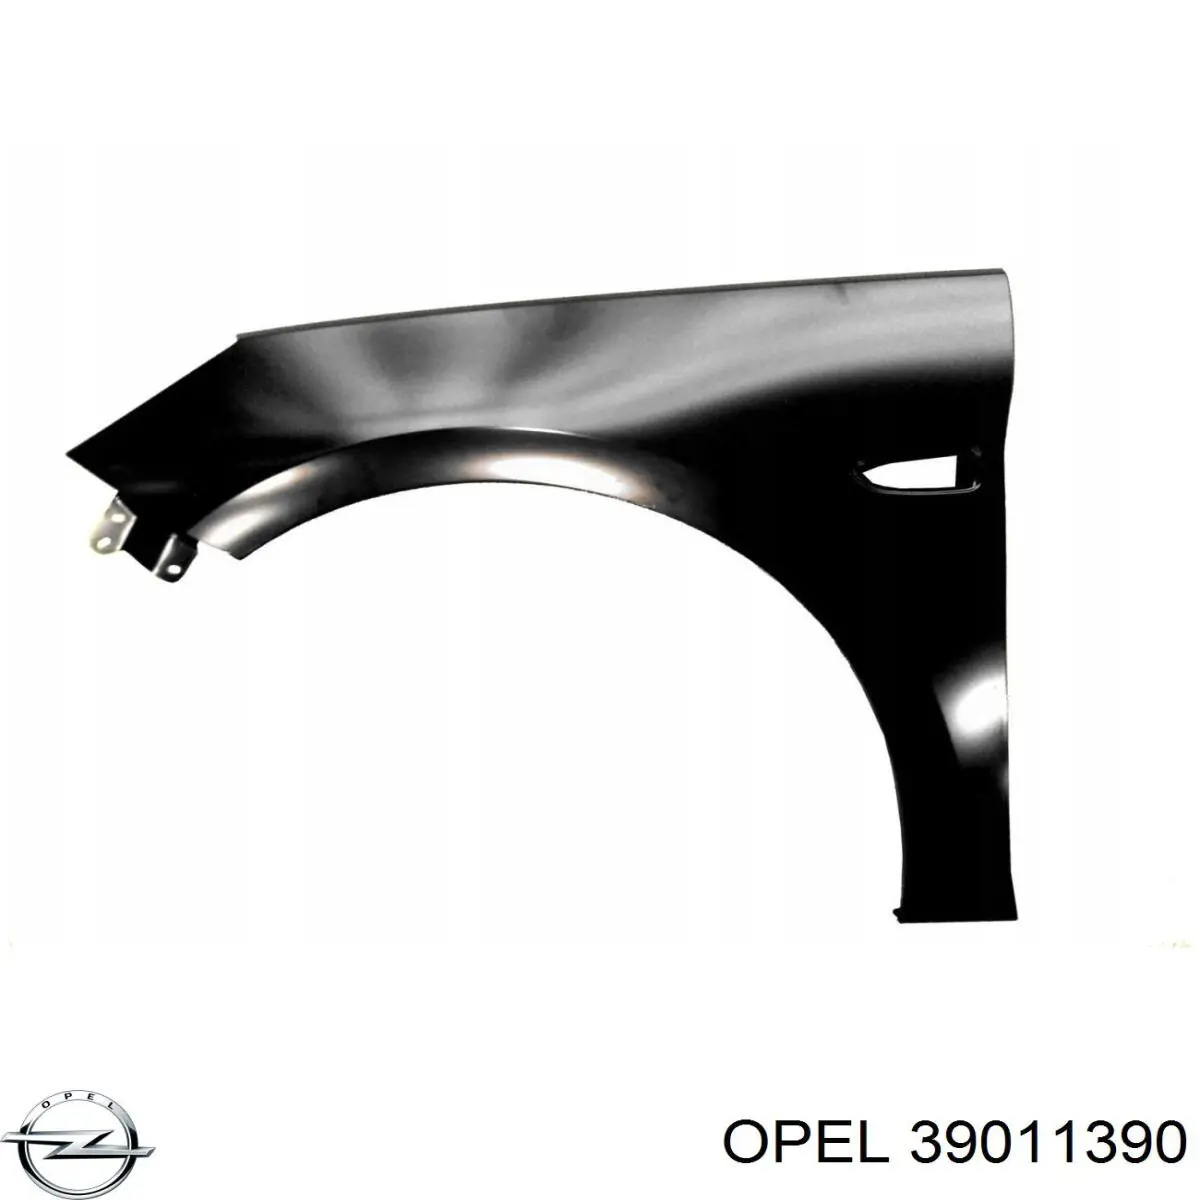 39011390 Opel крыло переднее левое